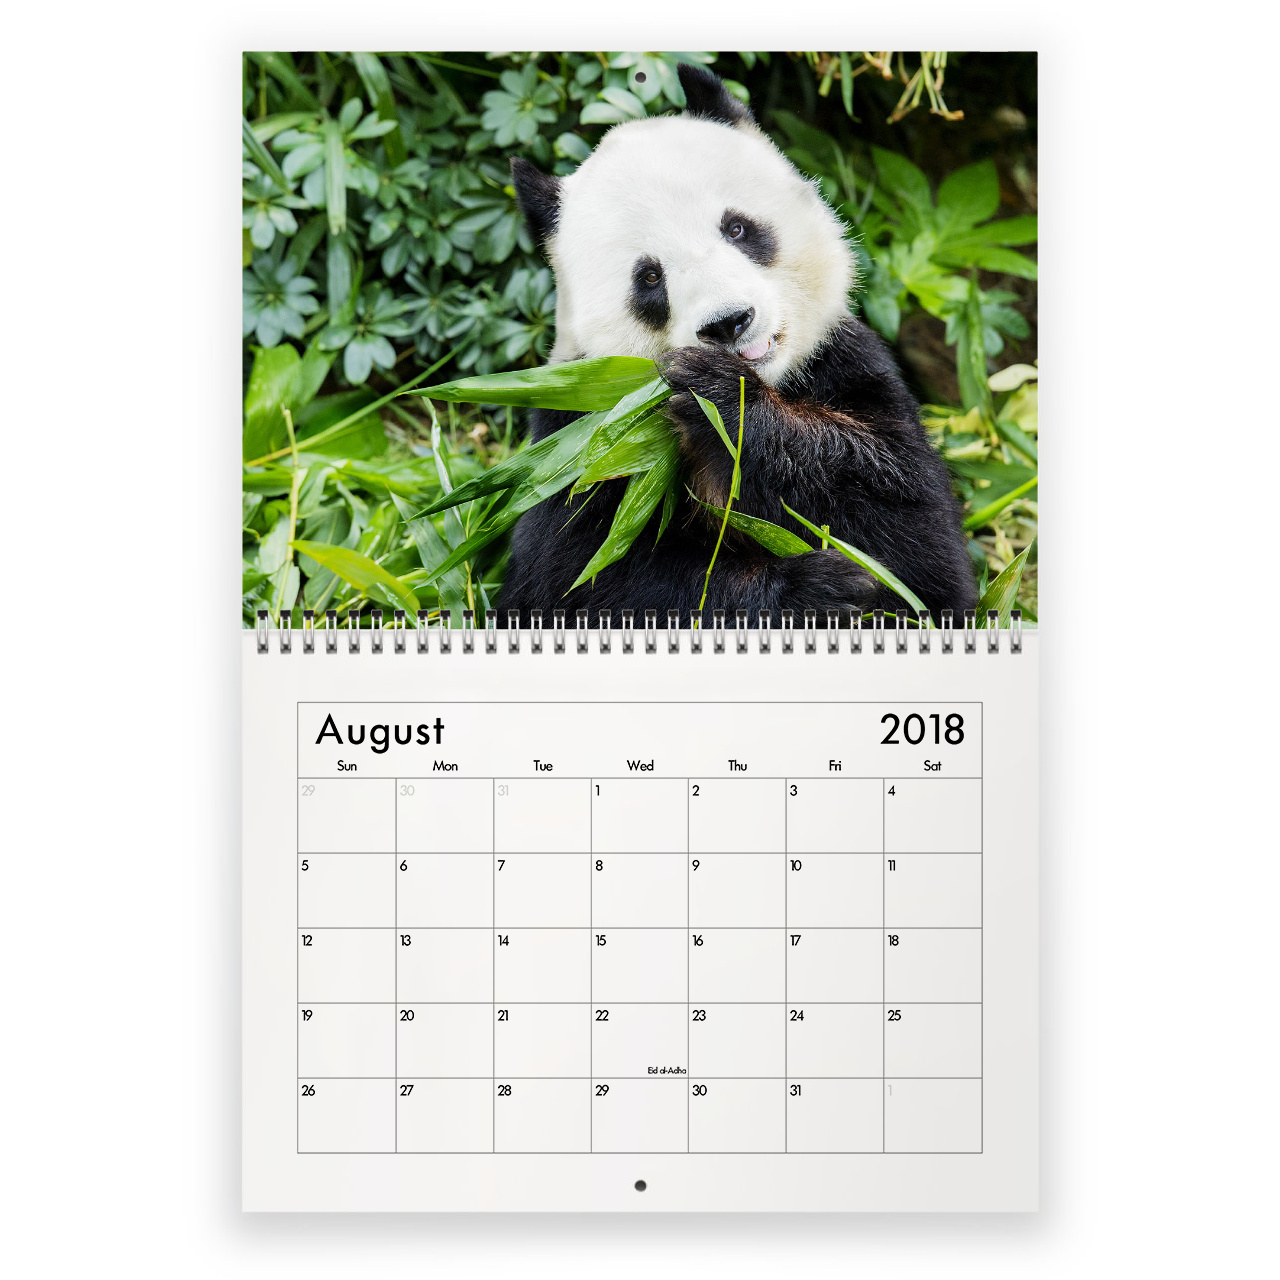 panda_2018_calendar_8.jpg